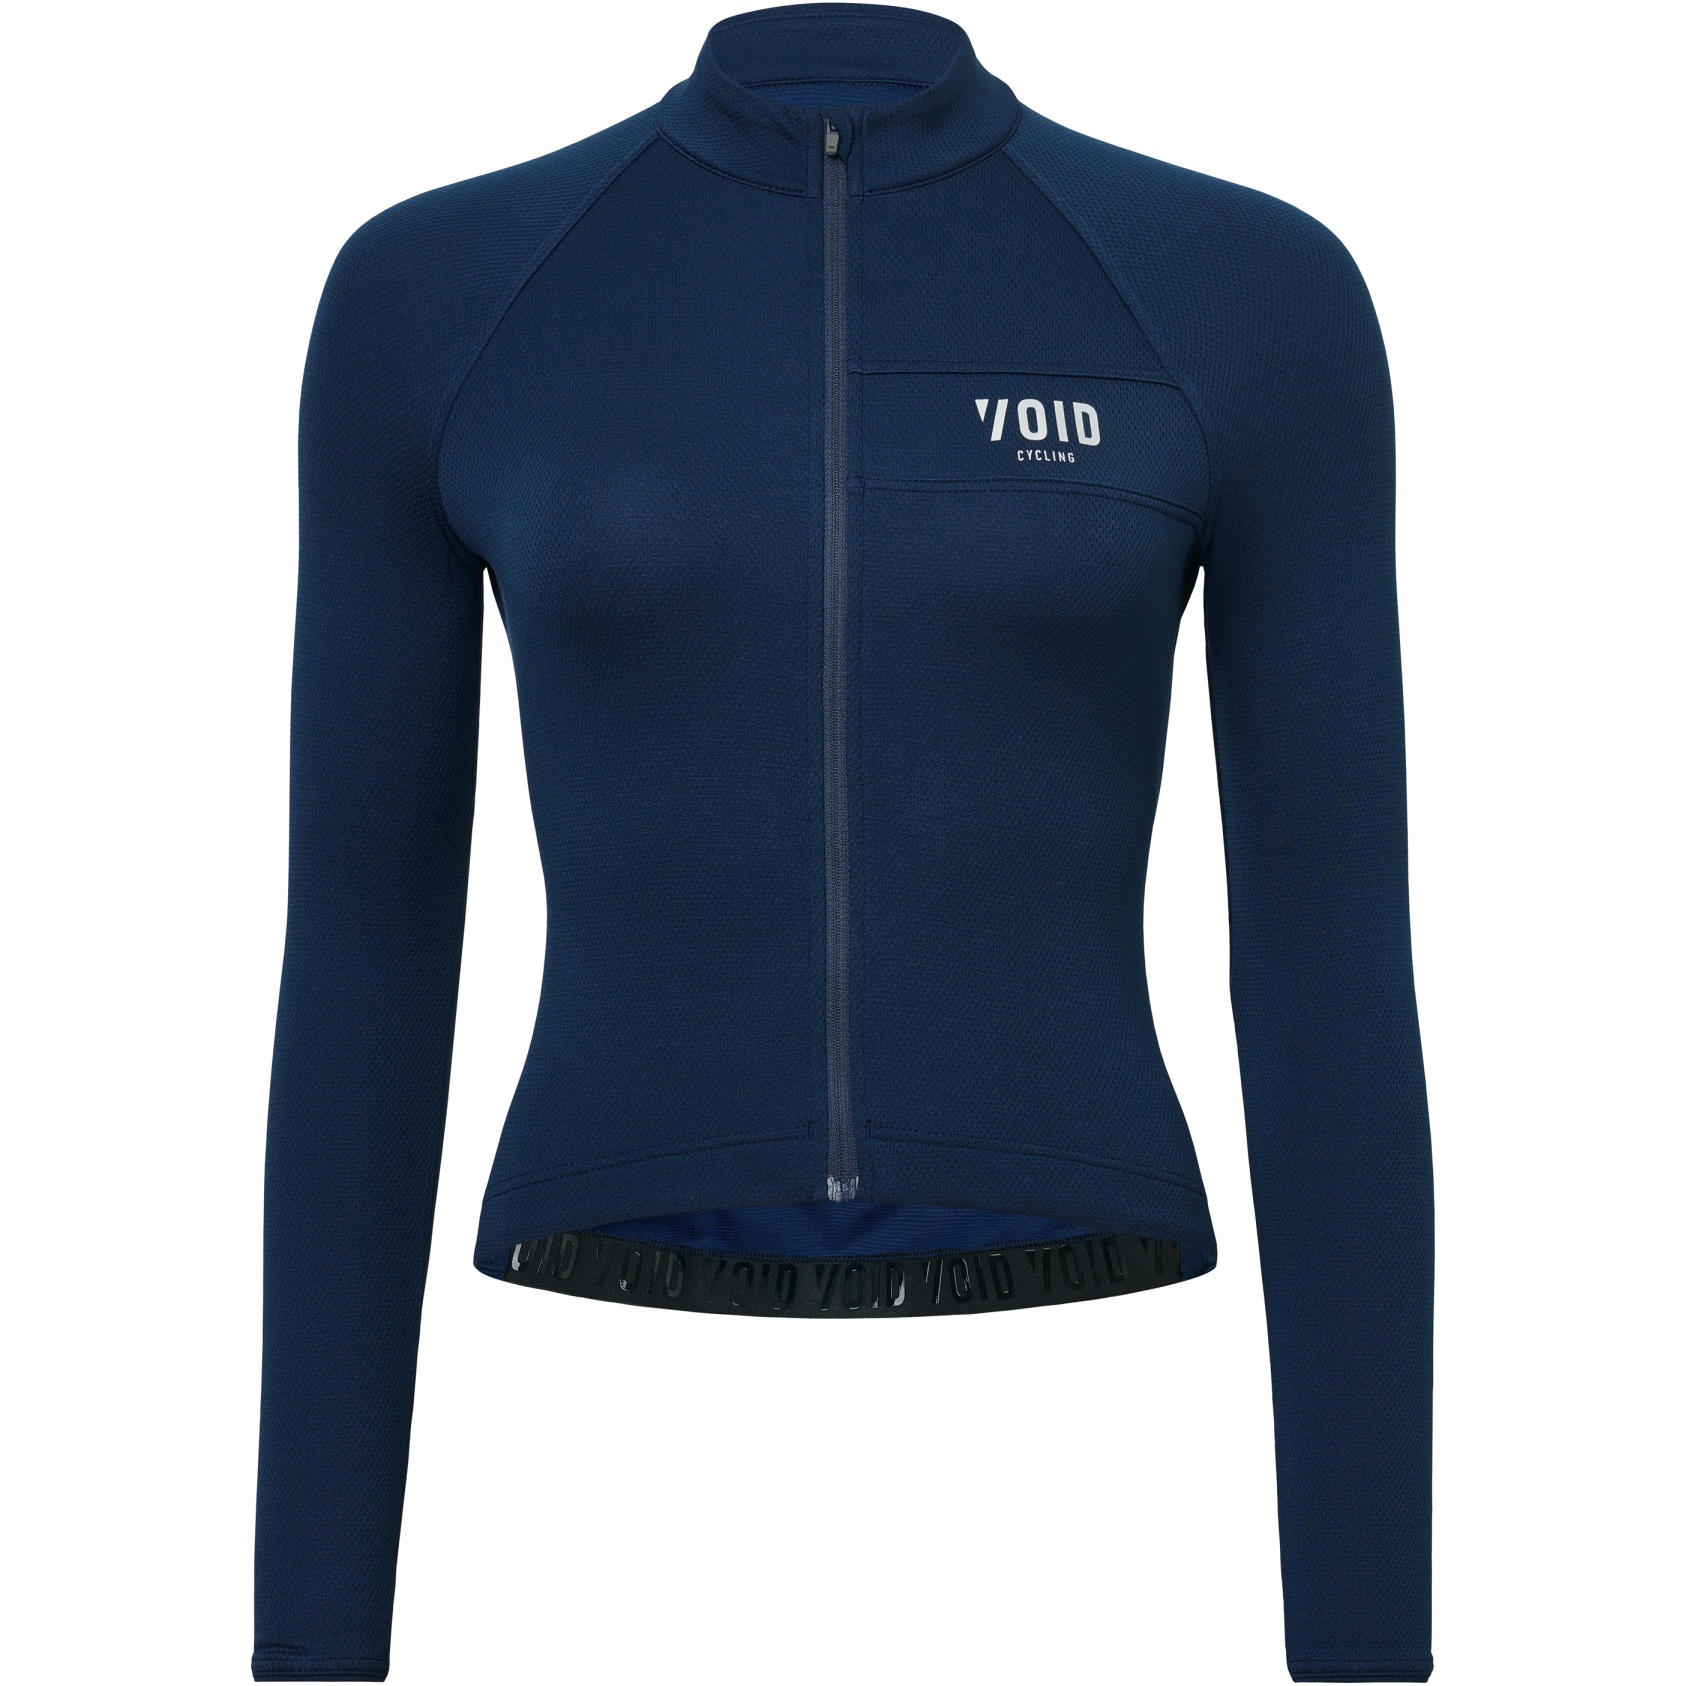 Productfoto van VOID Cycling Merino Women&#039;s Long Sleeve Jersey - Dark Blue